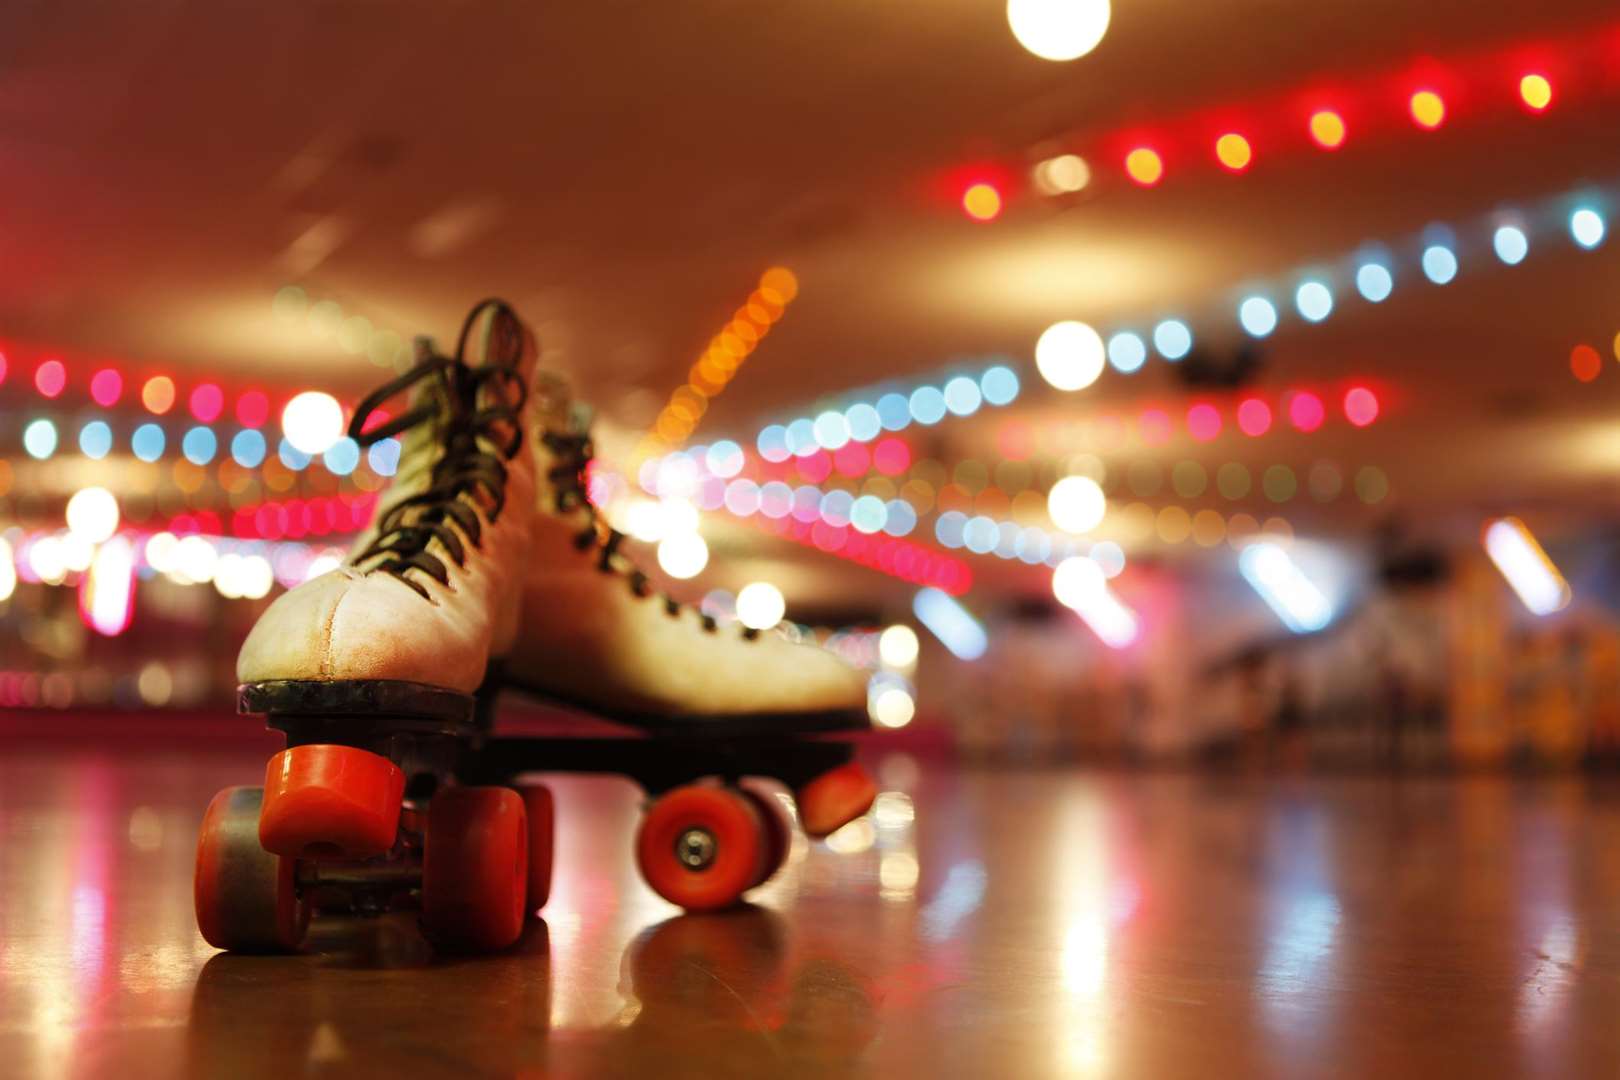 Ready for roller skating?